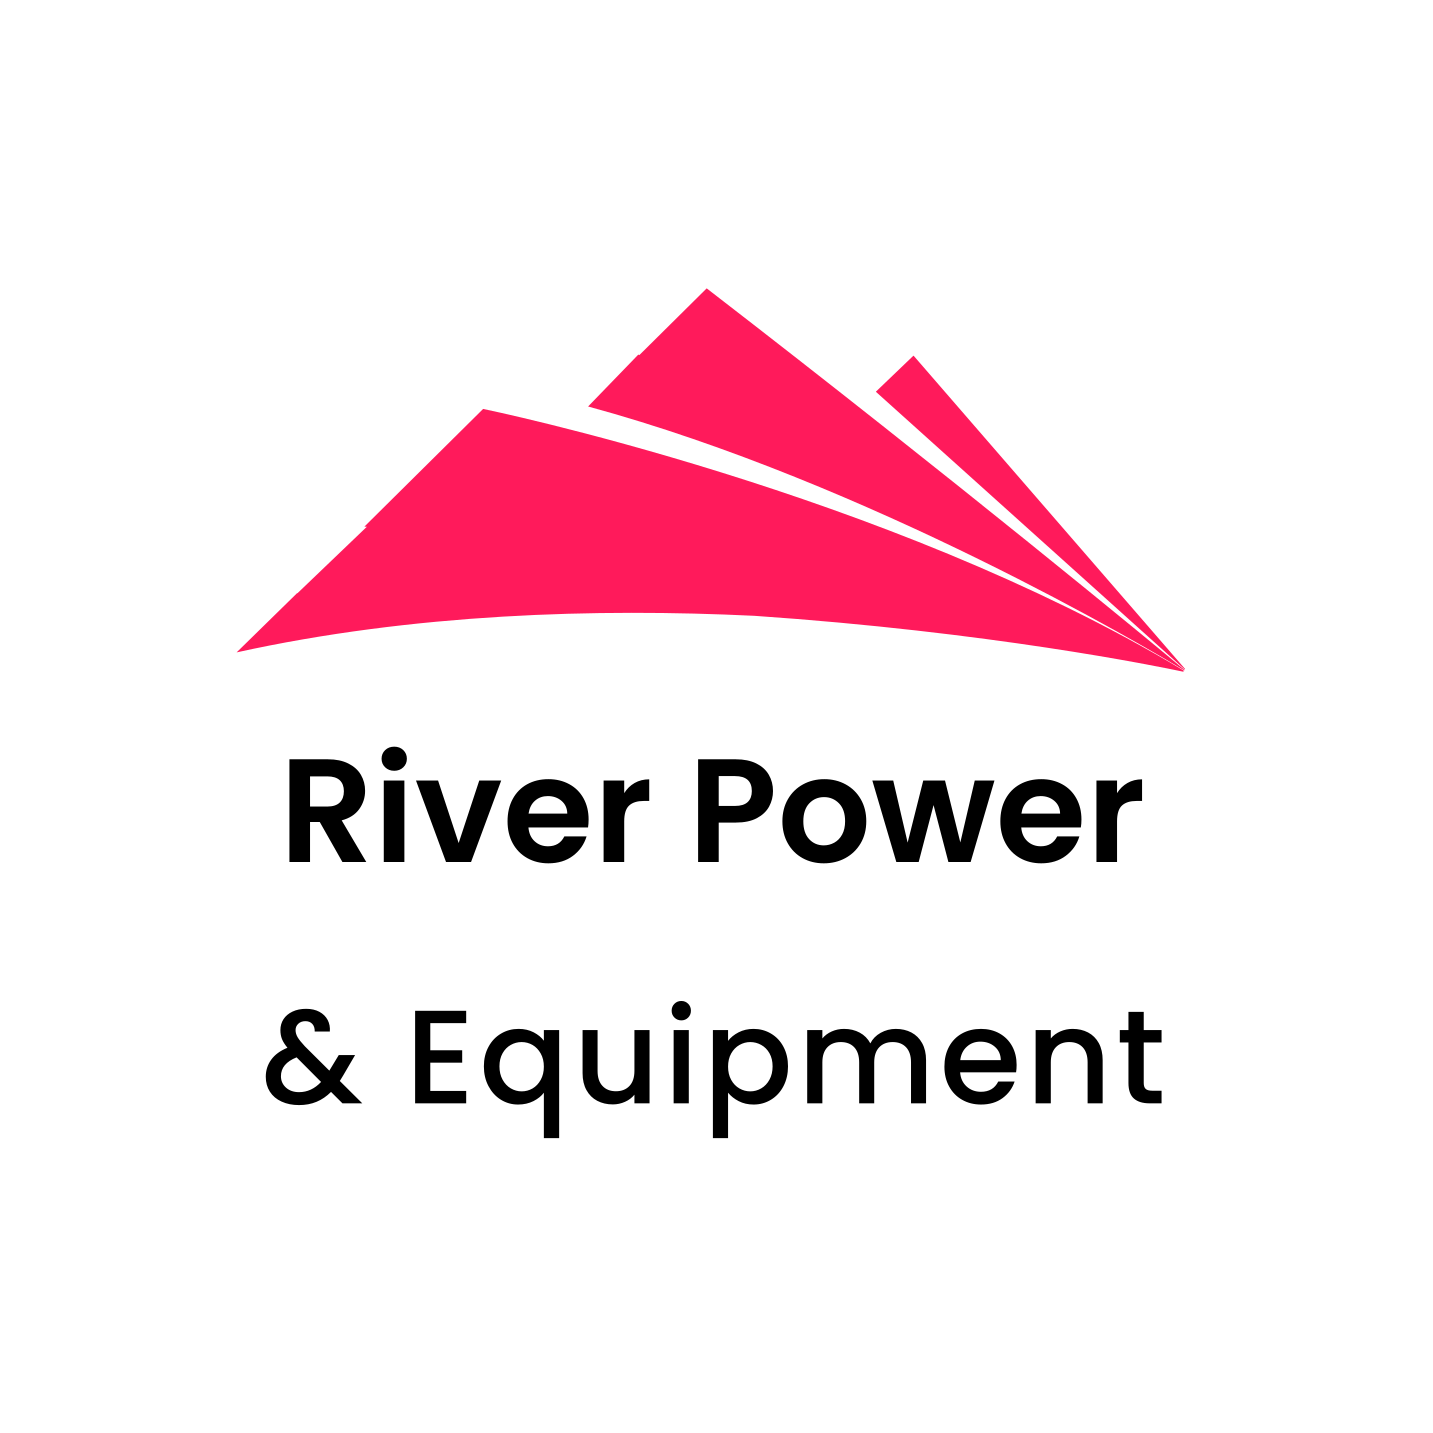 River Power & Equipment